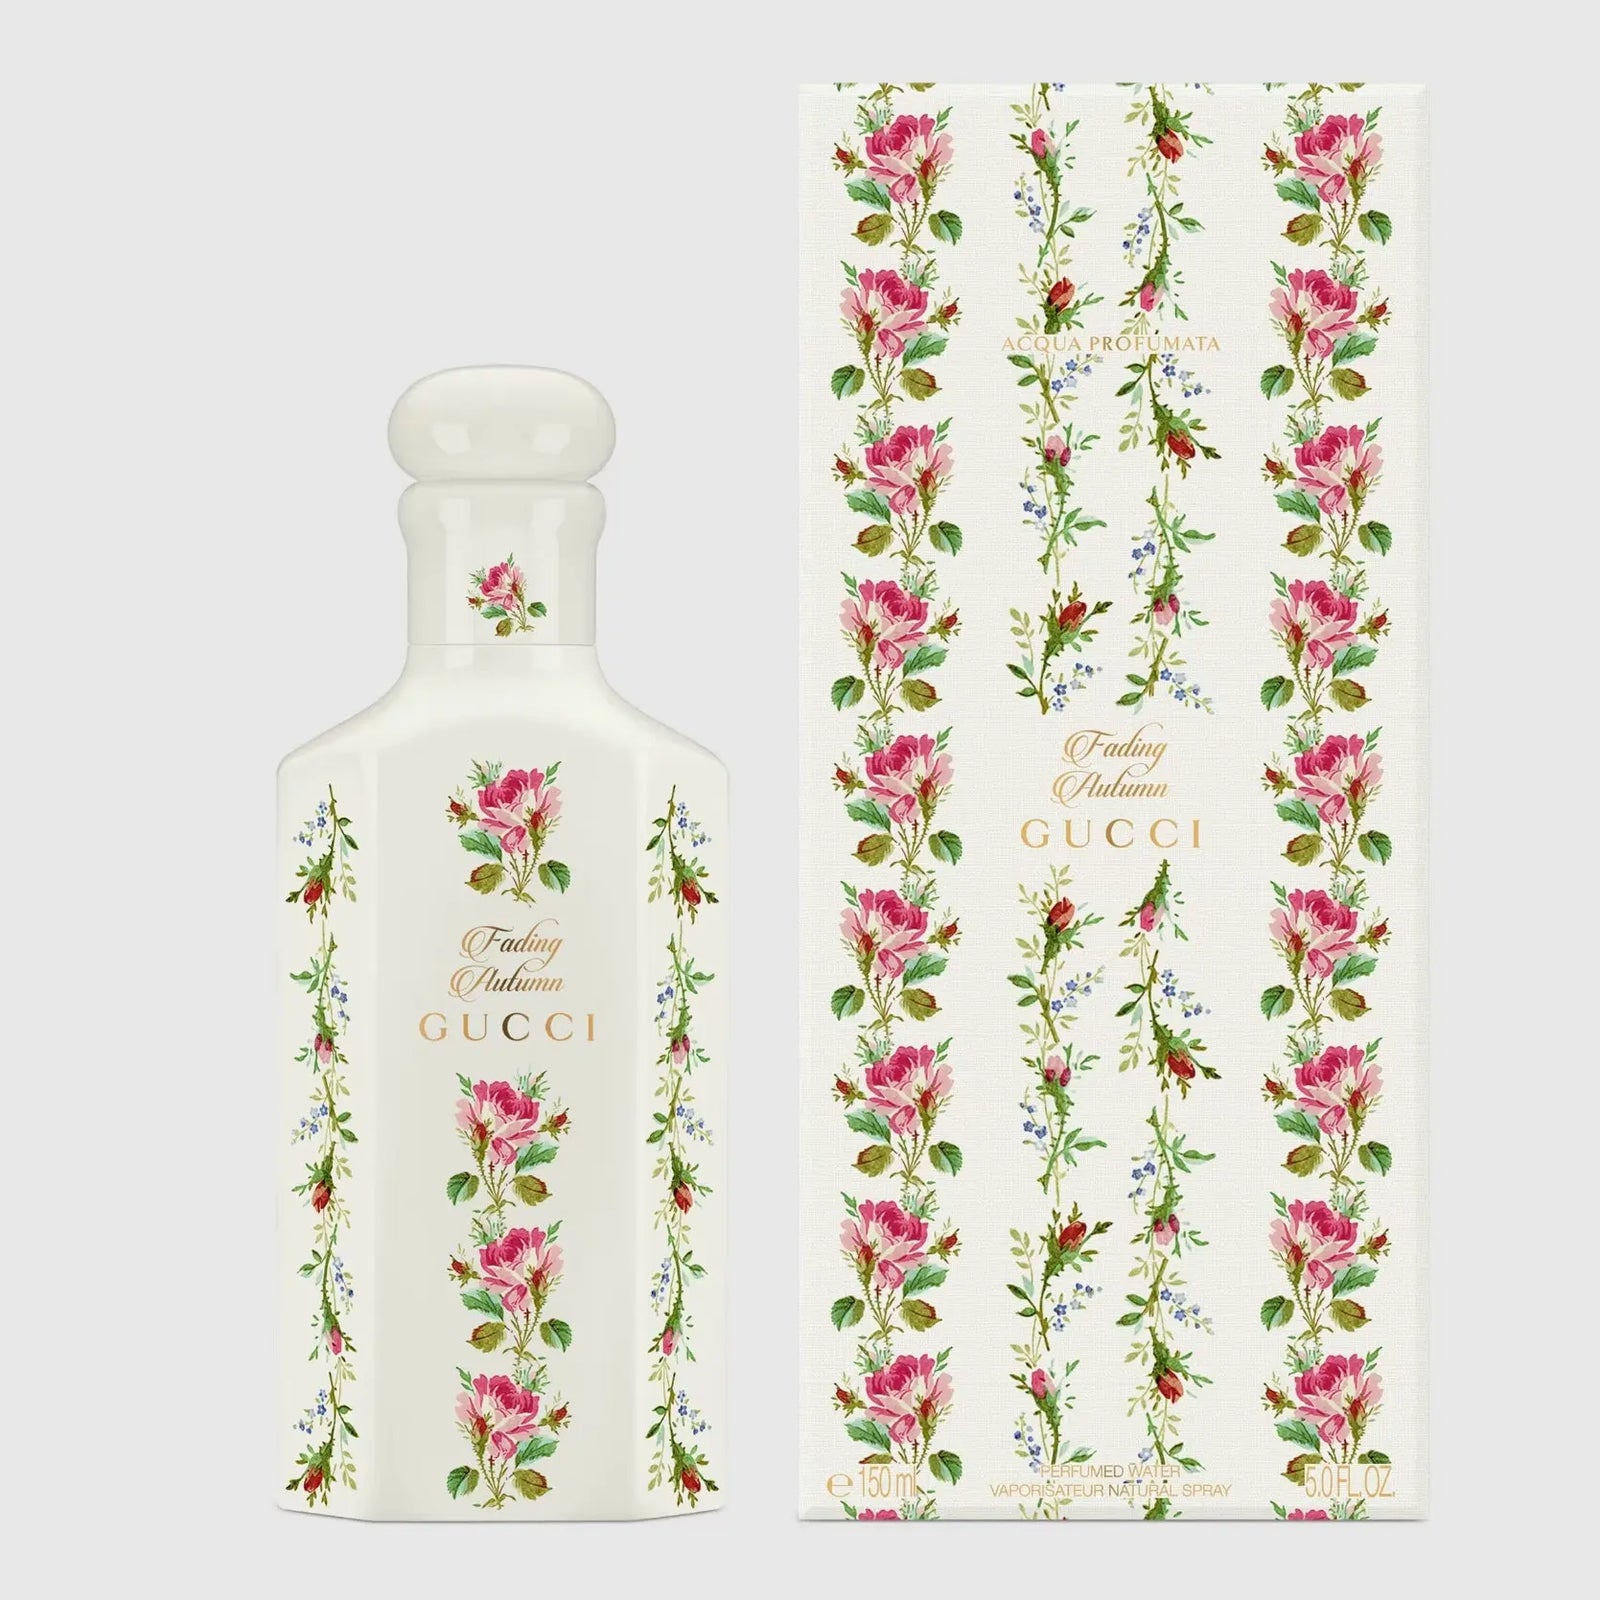 Gucci Acqua Profumata Fading Autumn Unisex 150ml Imported Perfumes & Beauty Store